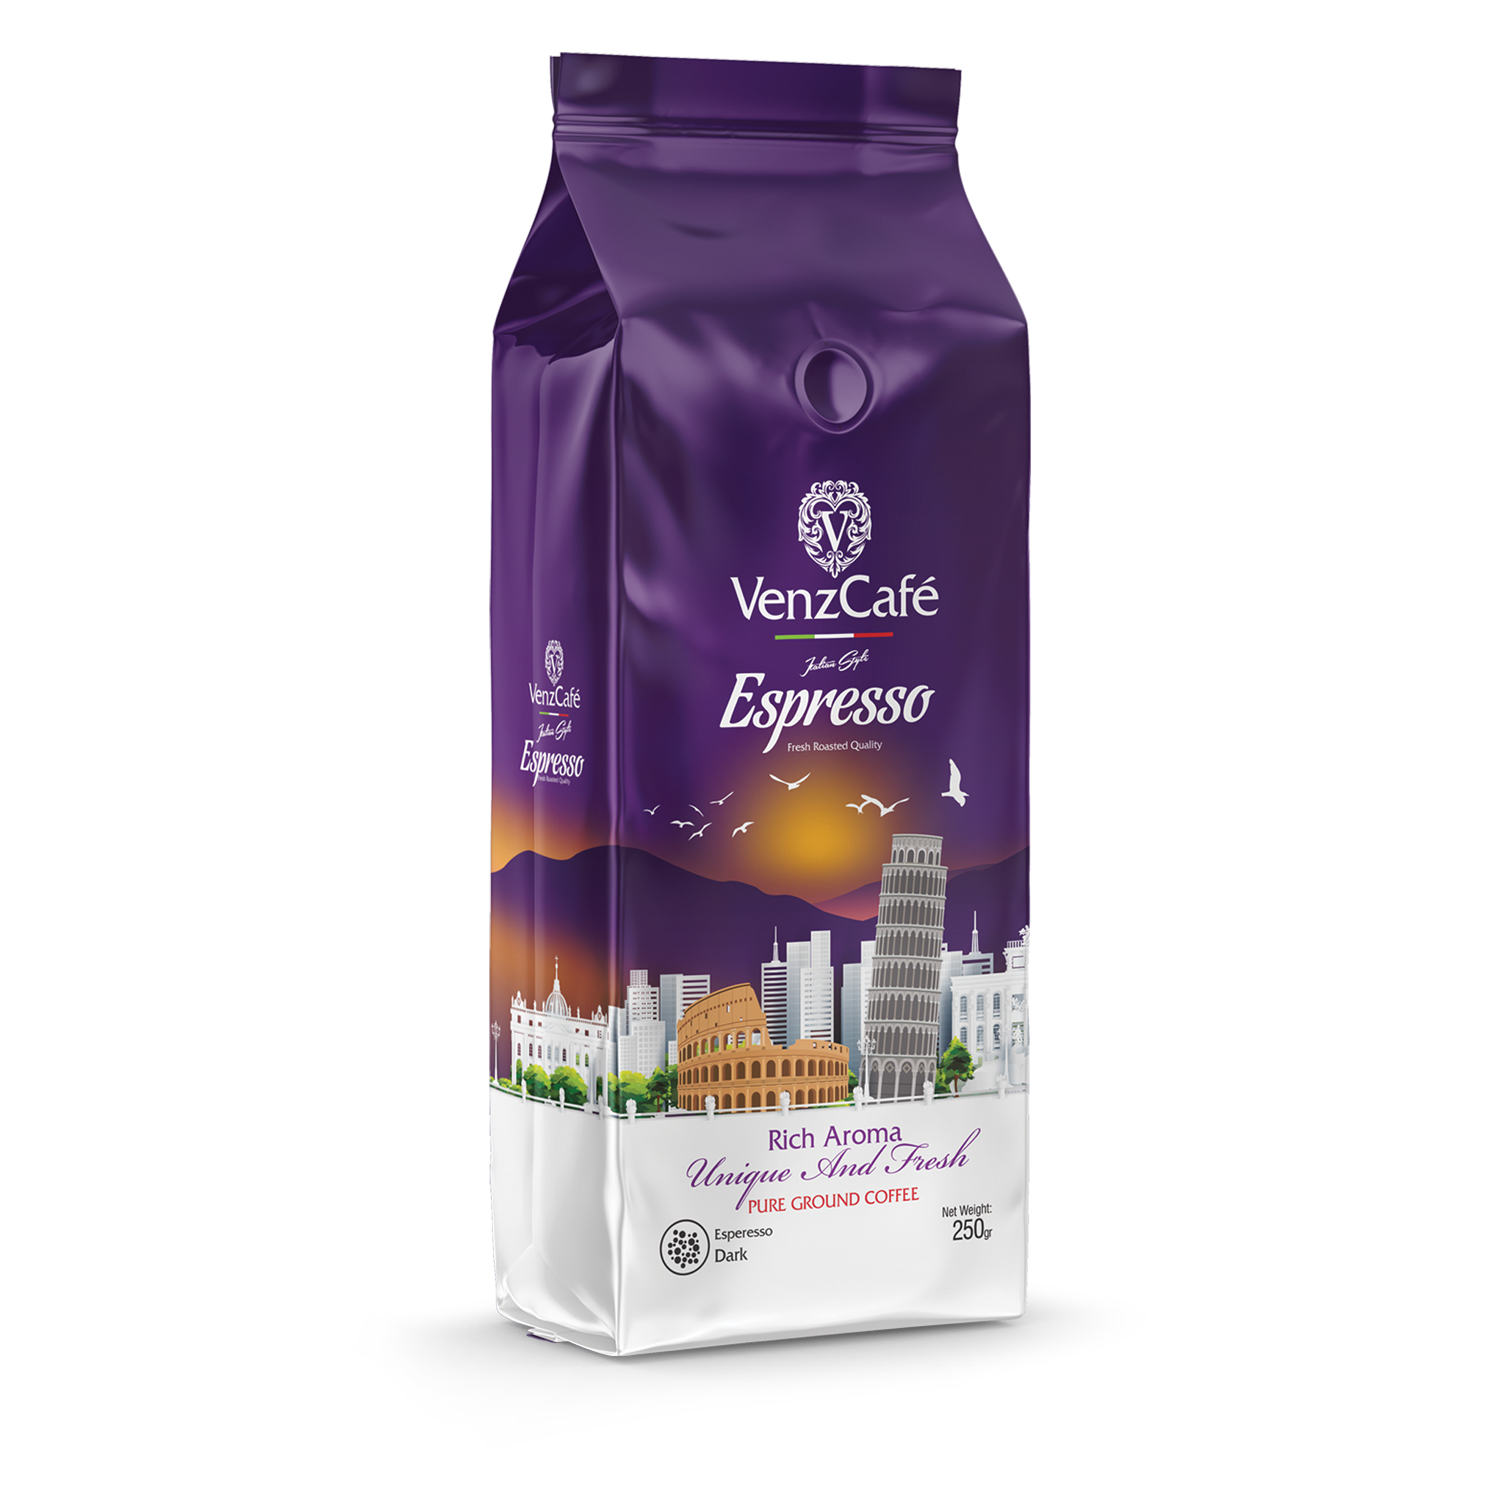 پودر قهوه اسپرسو دارک ونزکافه – 250 گرم